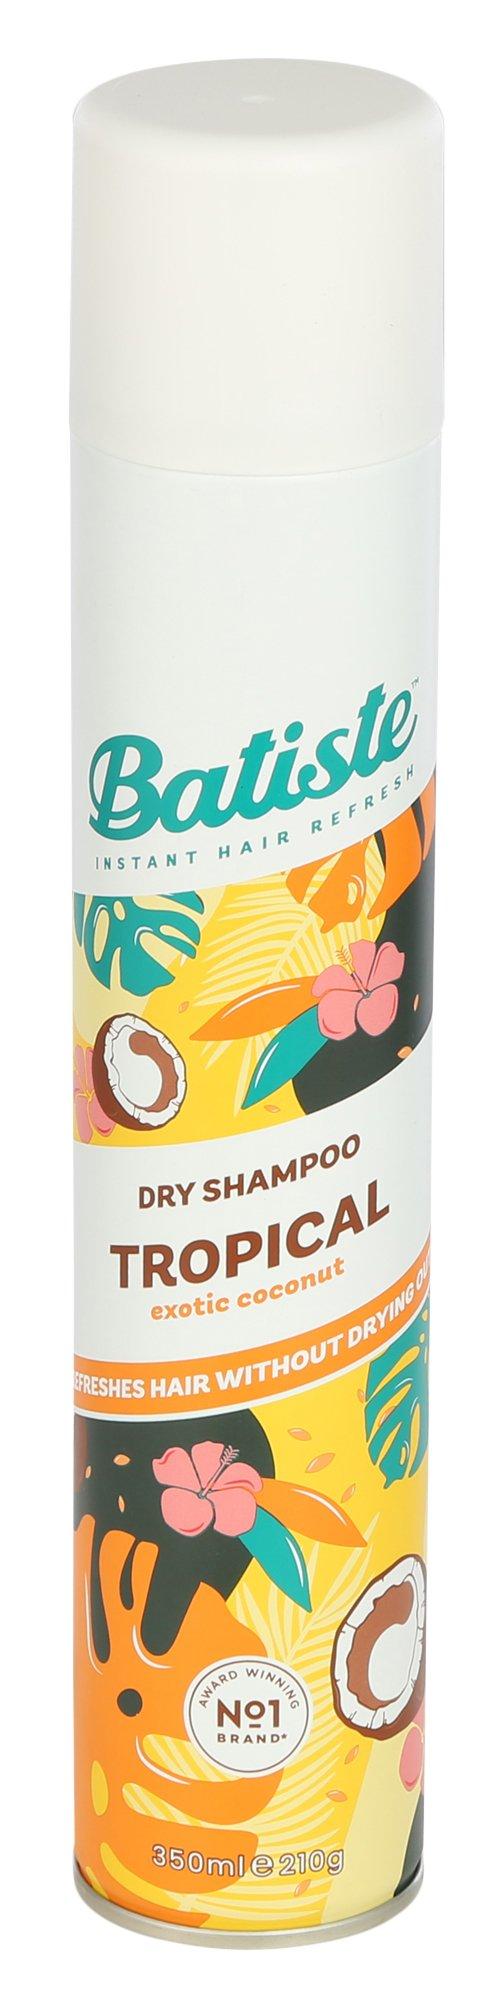 11.8 oz Tropical Dry Shampoo